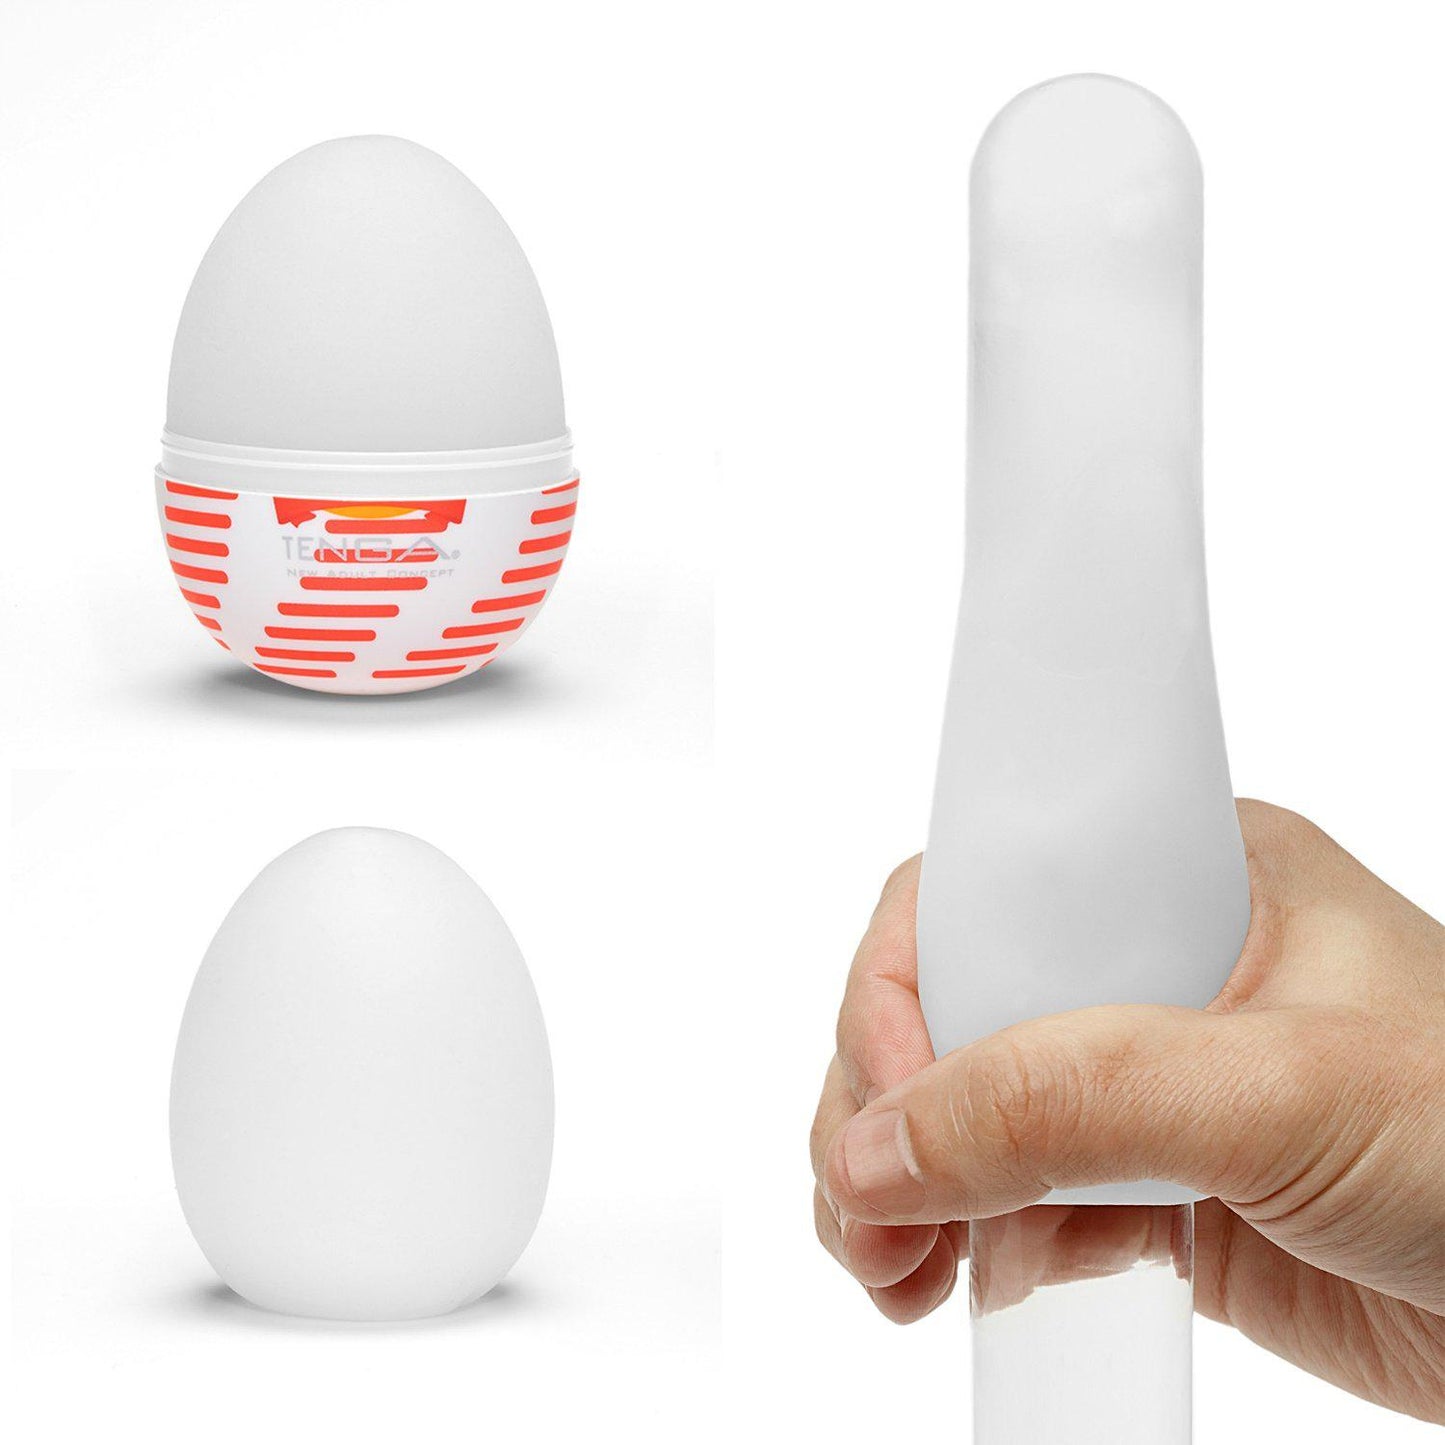 TENGA Egg Tube 管狀橫紋飛機蛋 飛機蛋 購買